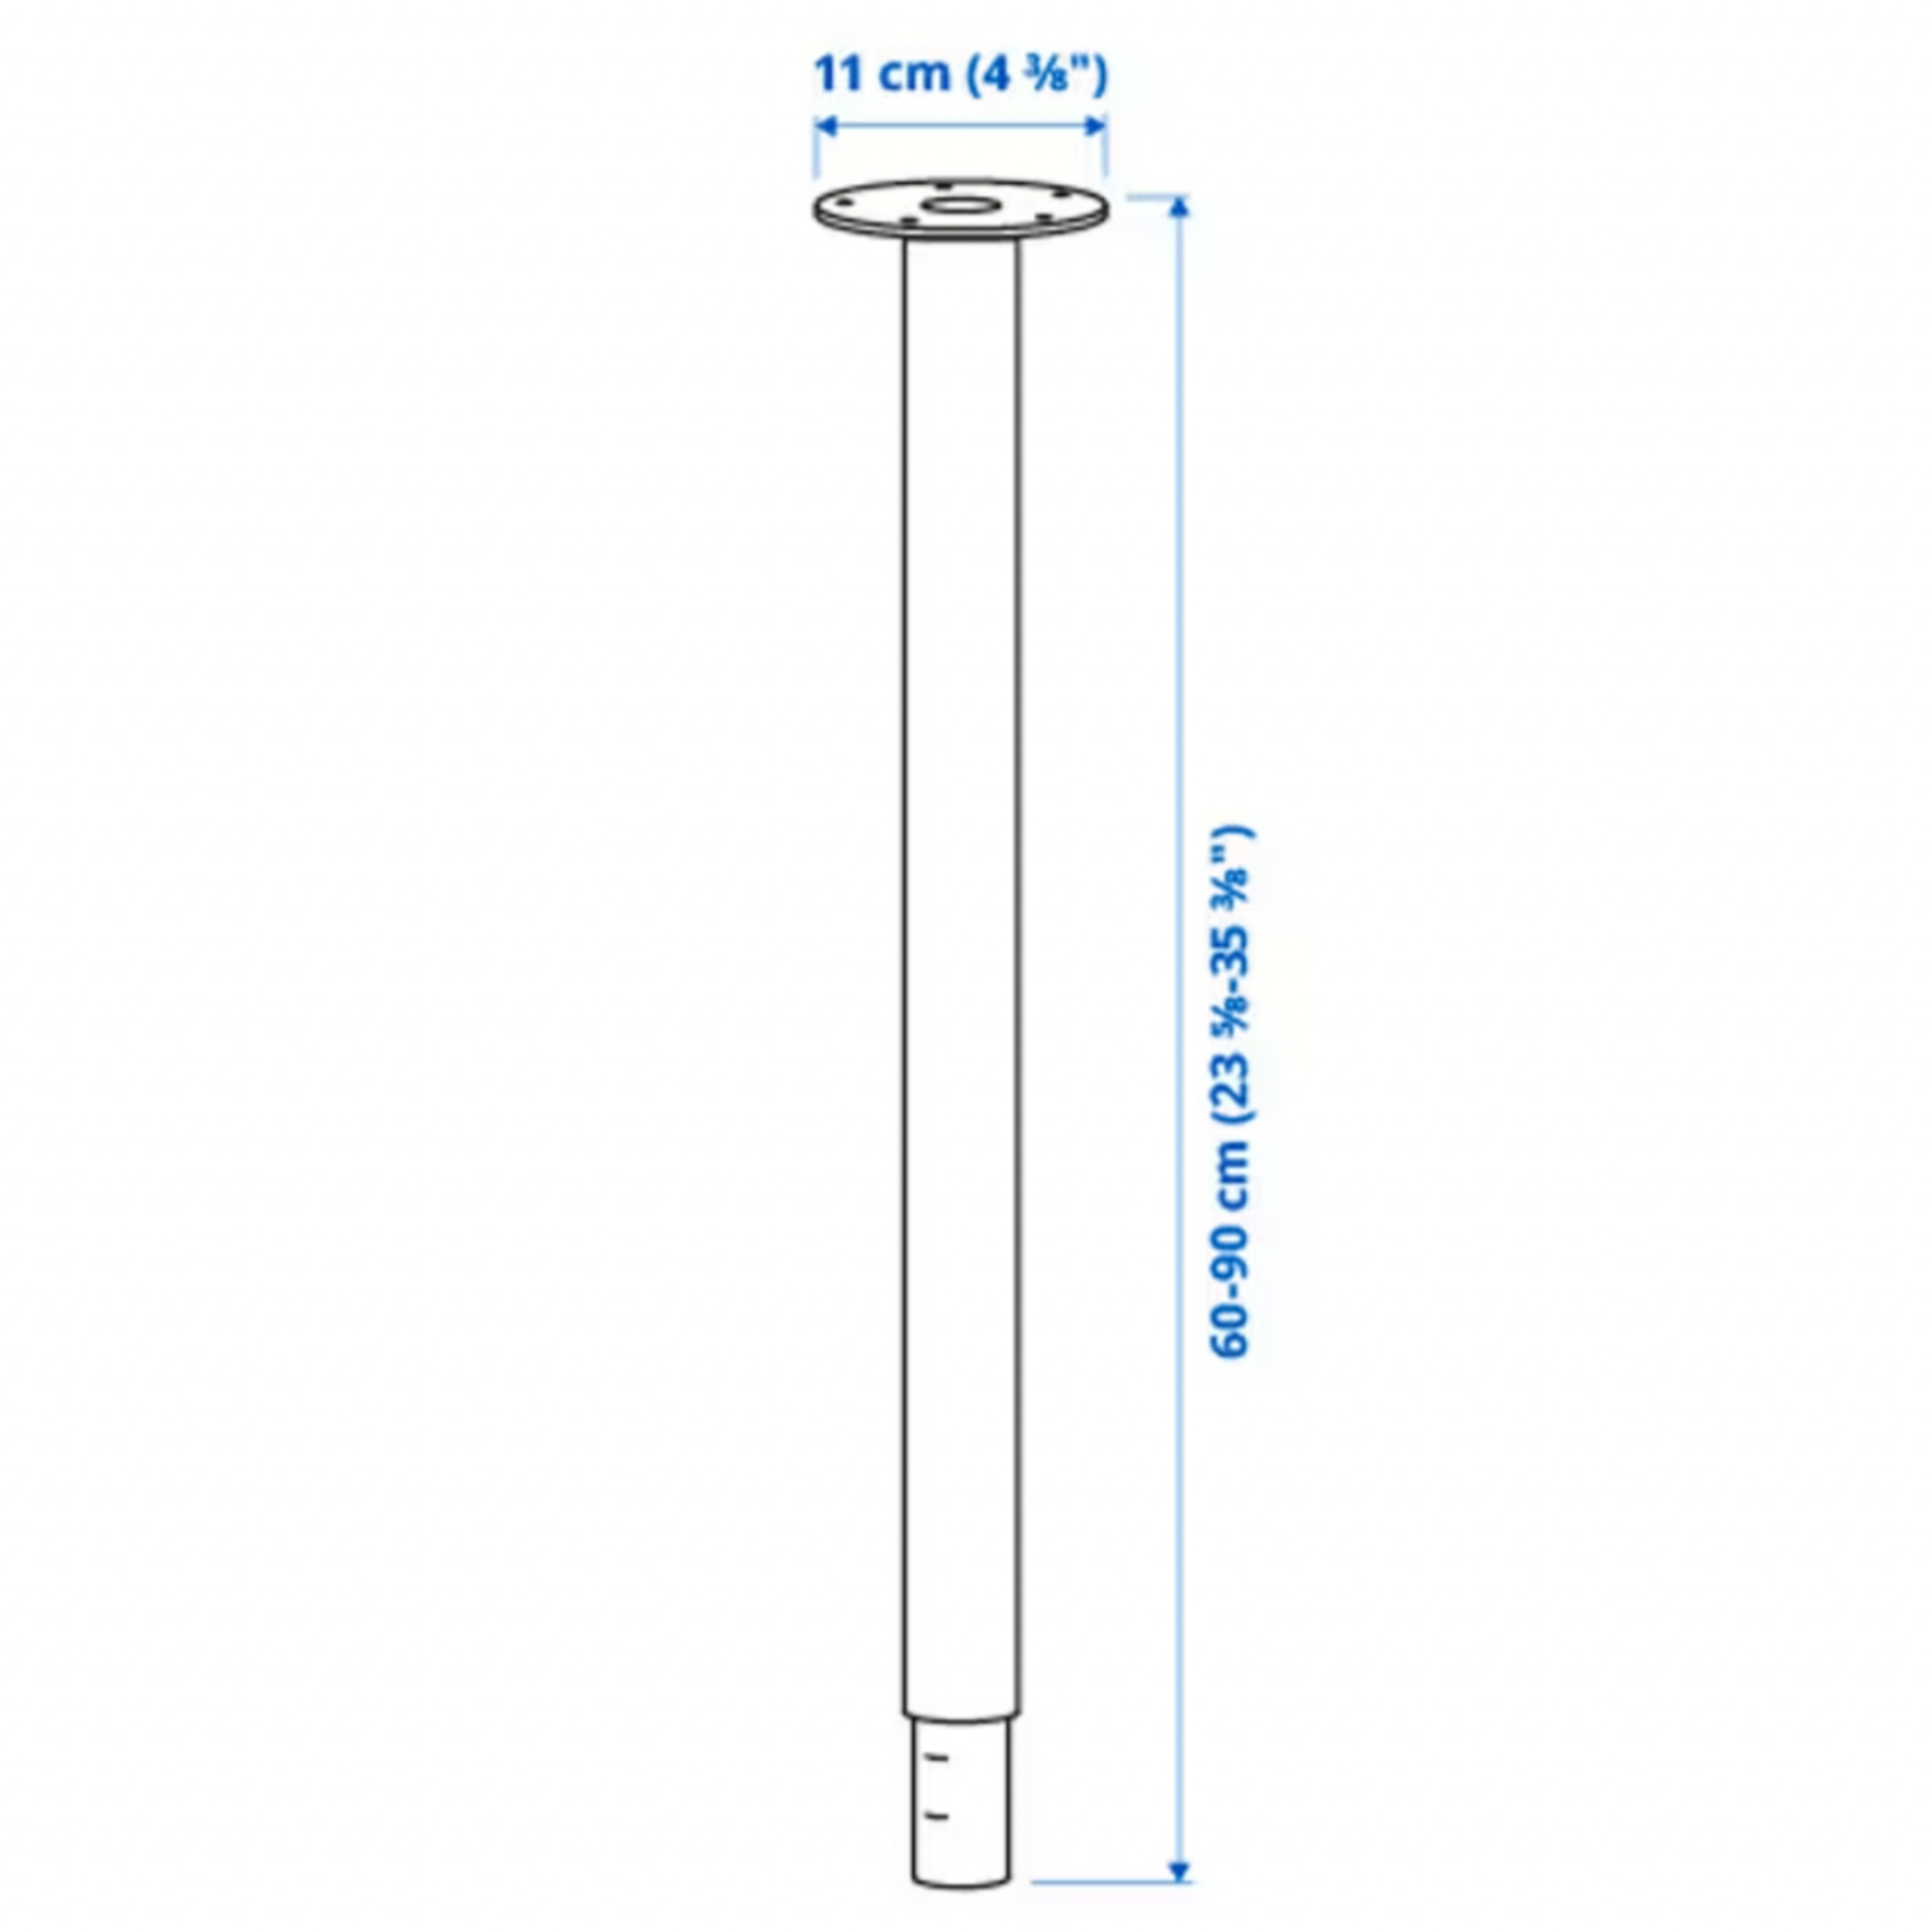 IKEA Olov Adjustable Pole Leg 60-90cm, White (4415956025409)